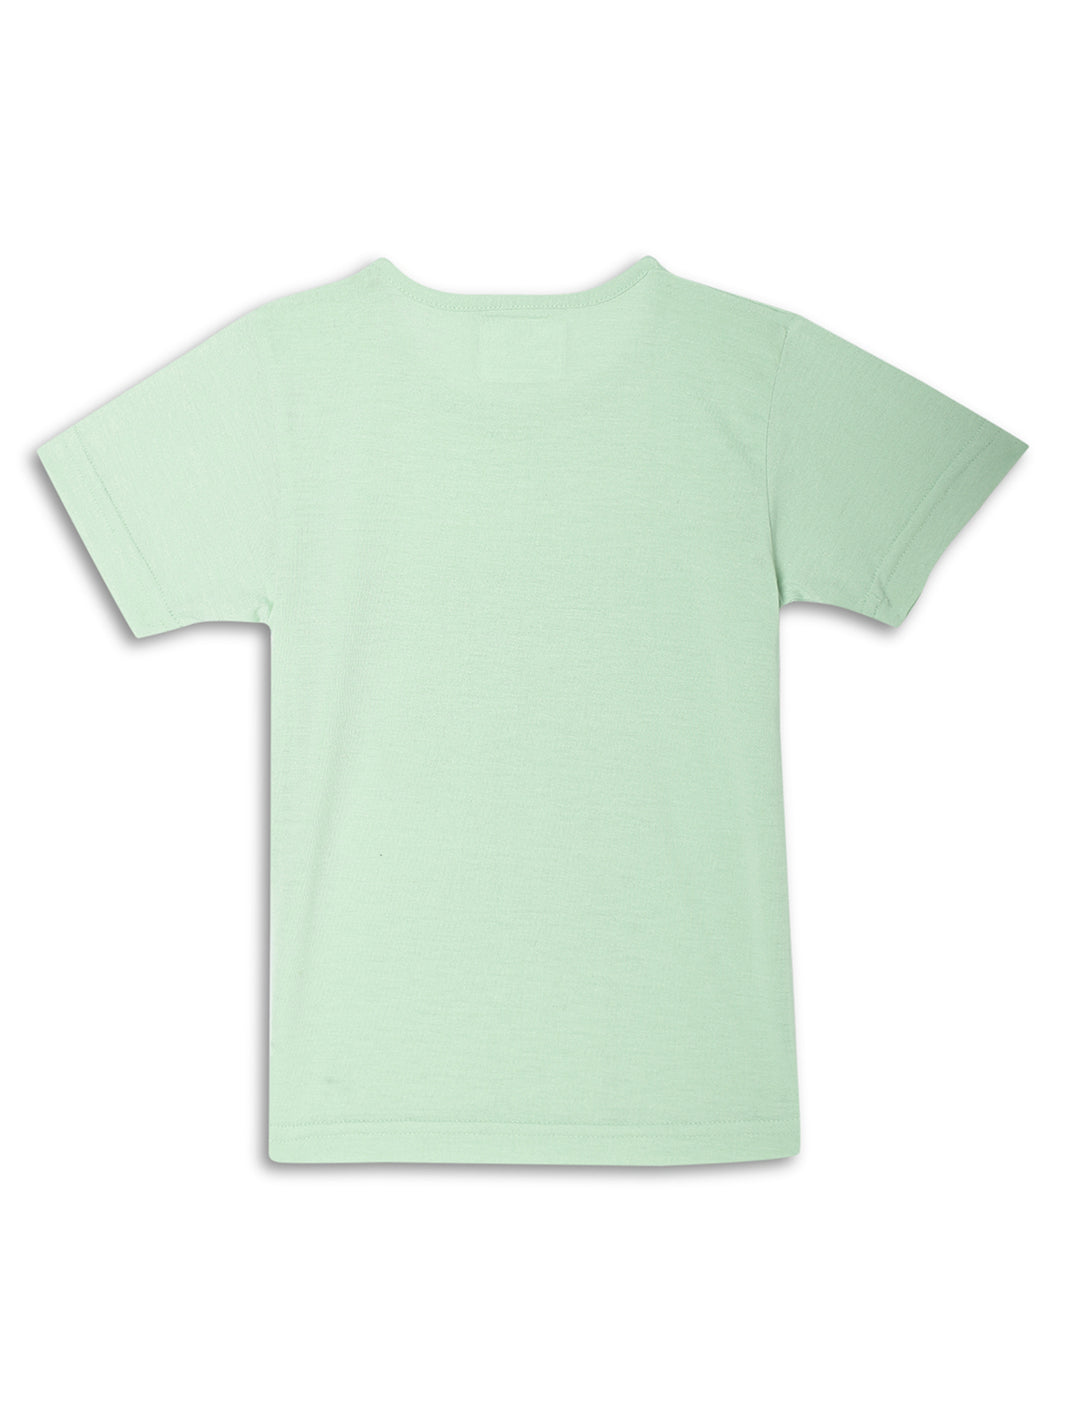 Vimal Jonney Printed  Green  Regular Fit Cotton blended T-shirts For Kids